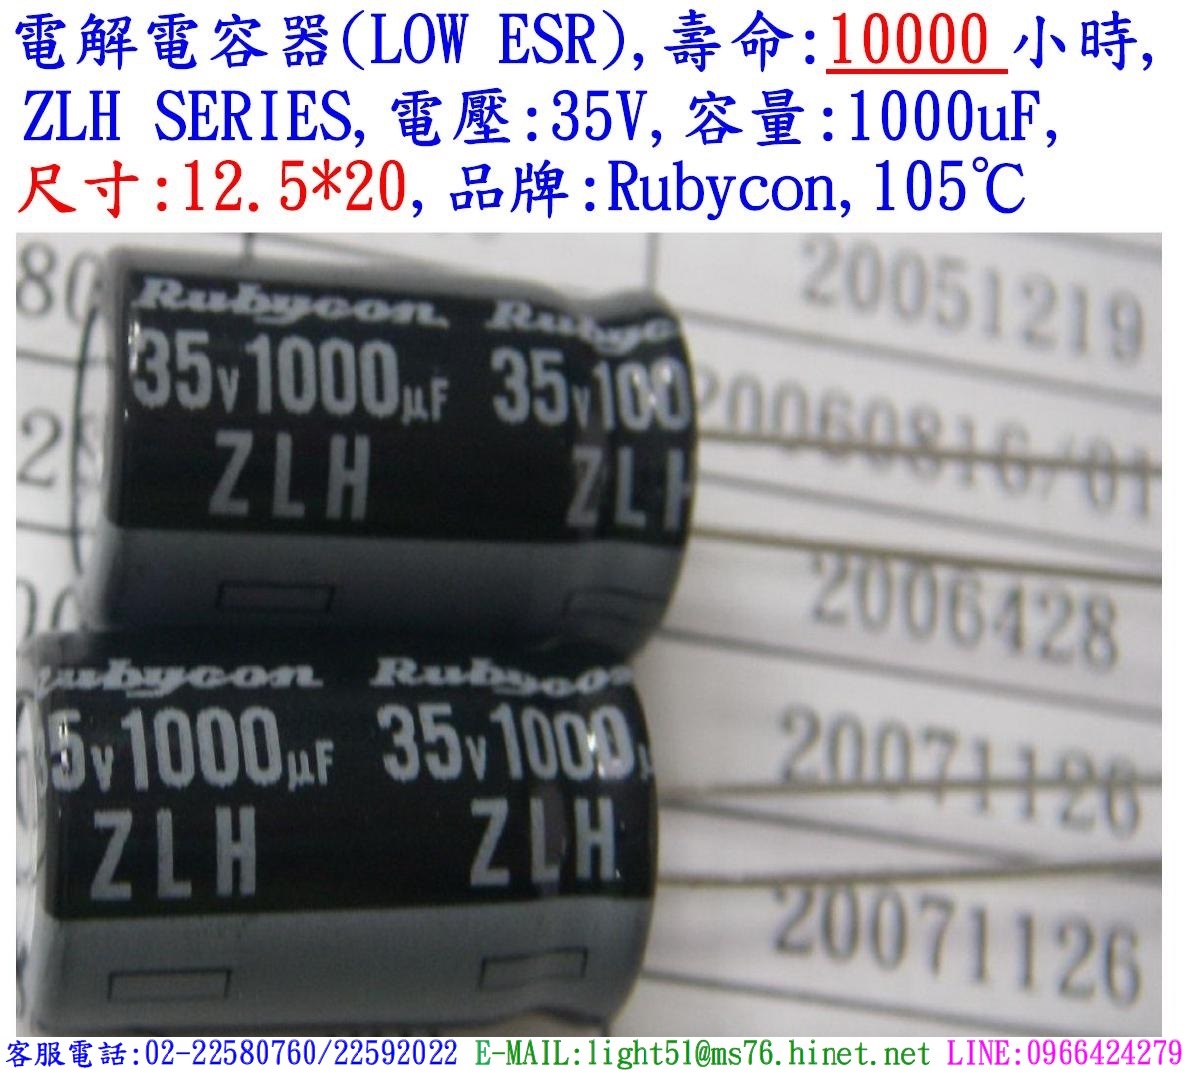 ZLH,35V,1000uF,尺寸:12.5*20,電解電容器(LOW ESR),壽命:10000小時,Rubycon